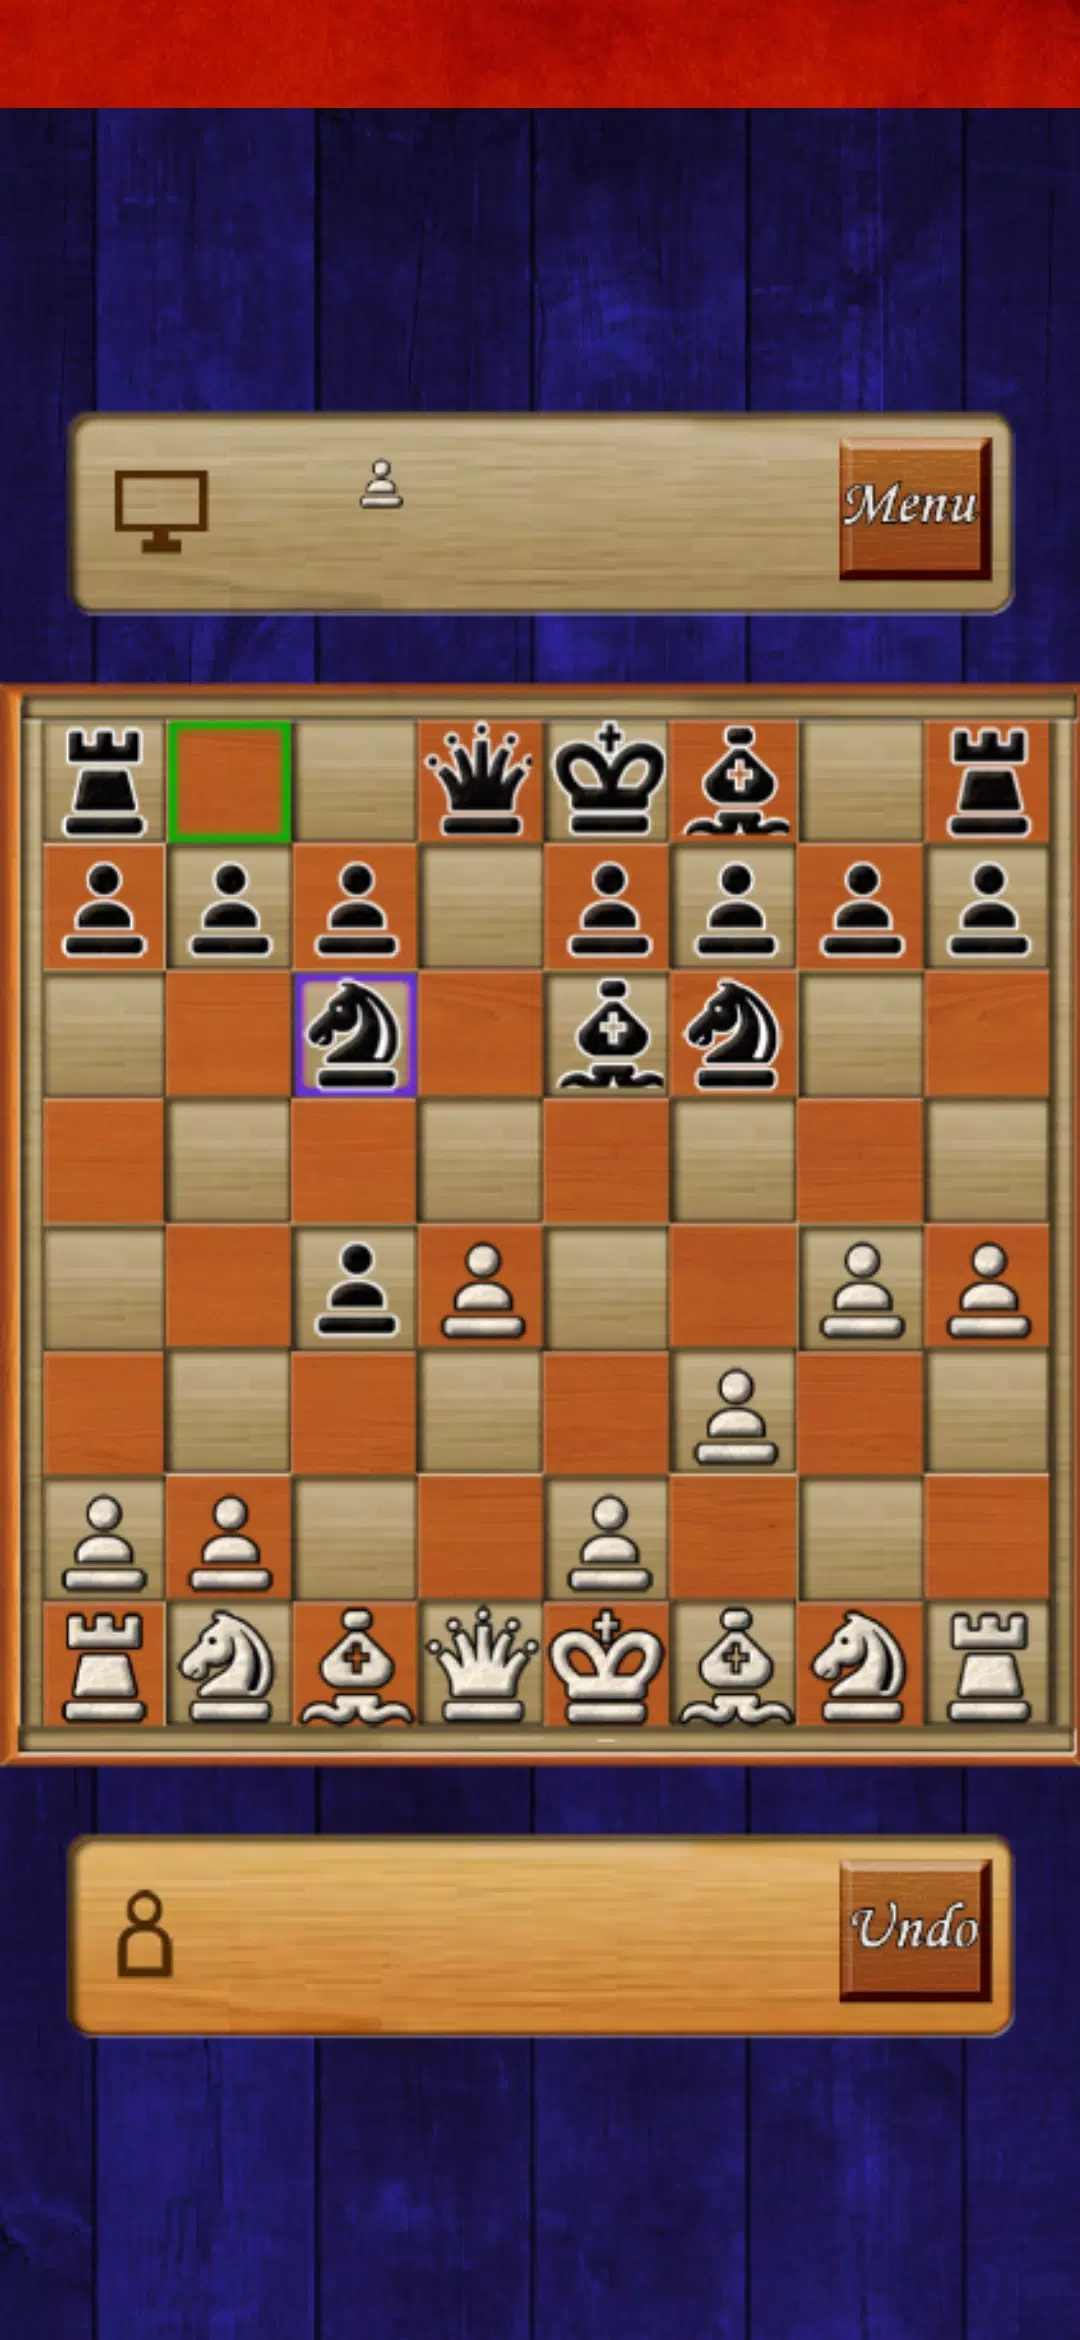 Xadrez para dois jogadores APK (Android Game) - Baixar Grátis